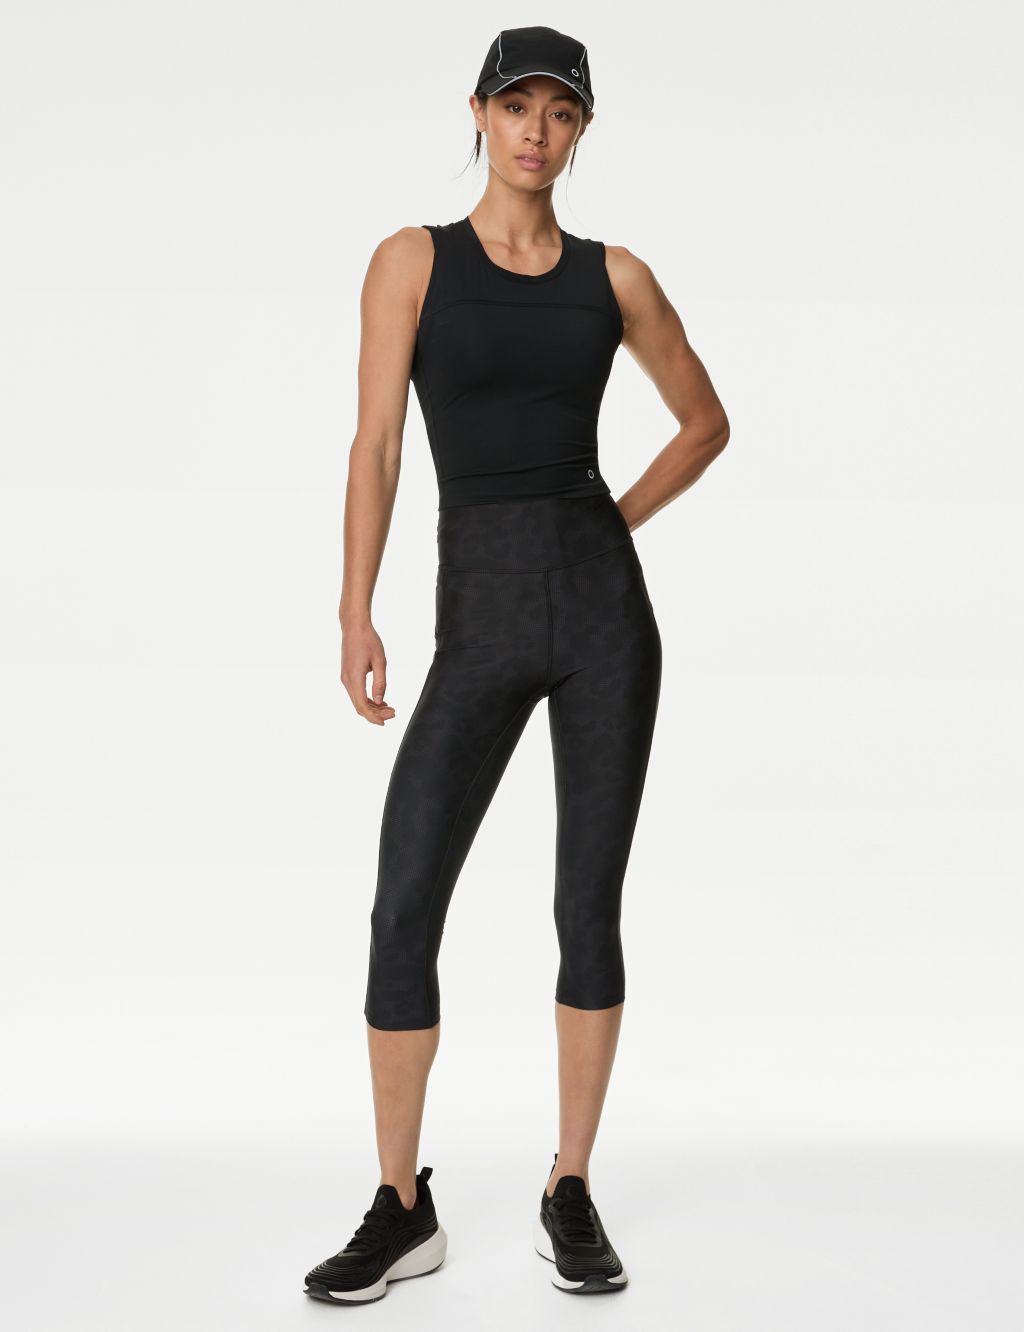 M&S Goodmove Gym Leggings, Full Length/ Crop. Size 6,24, 26, 28.  Black,Turquoise